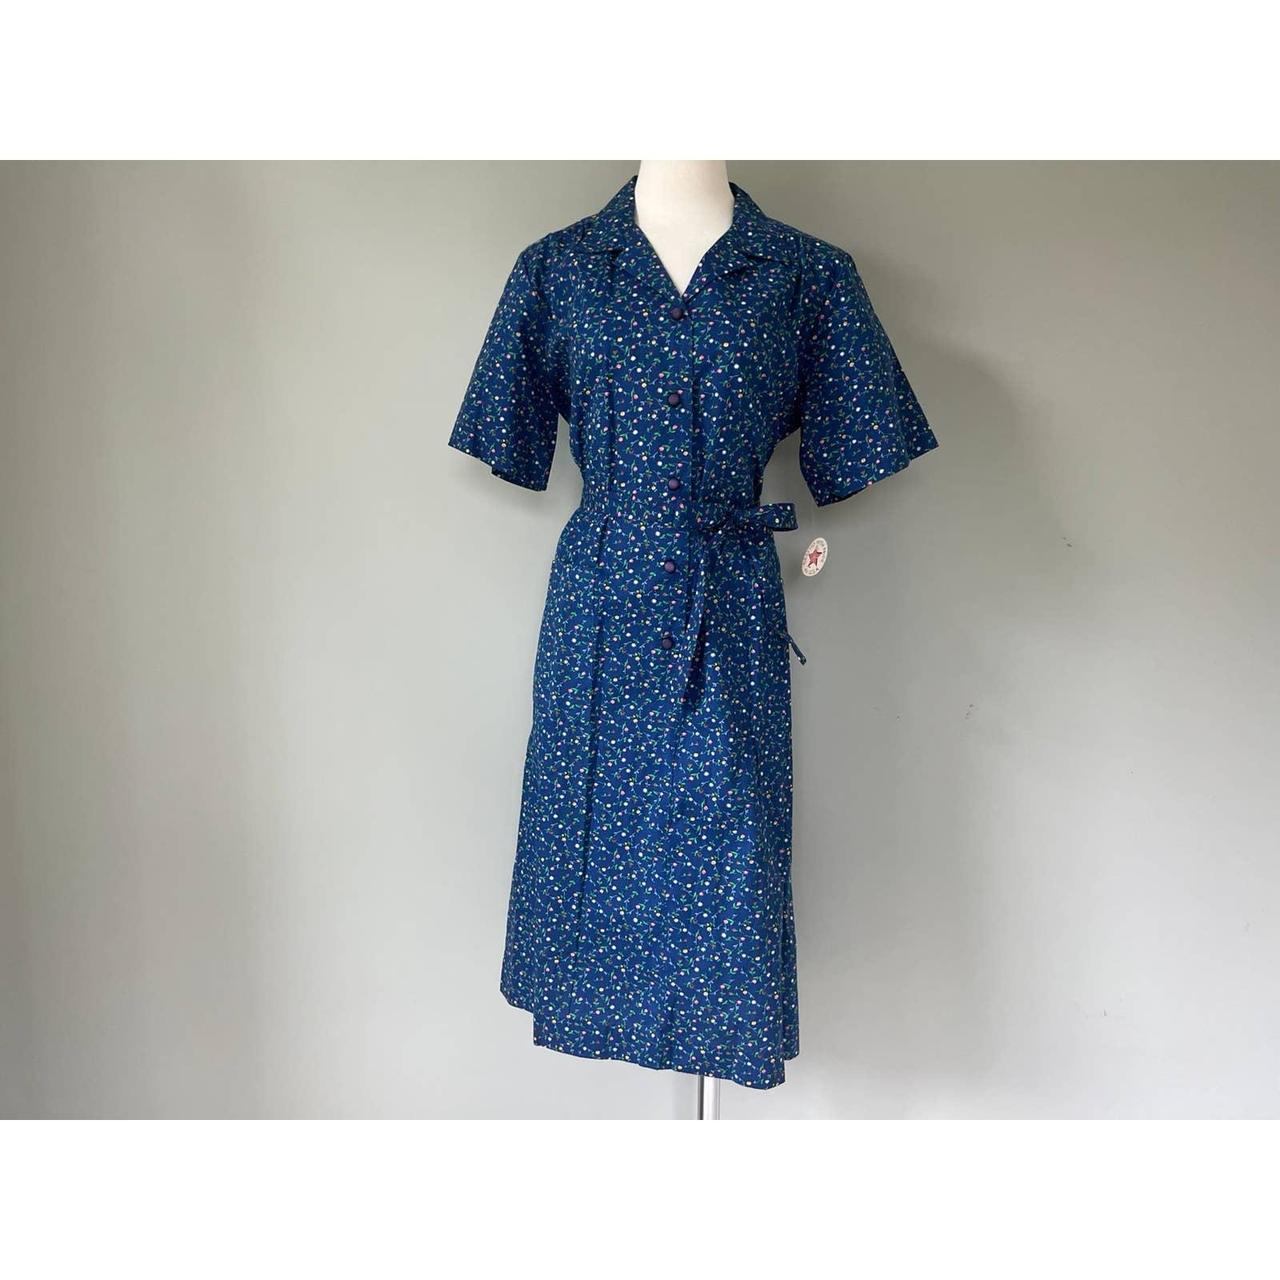 BNWT 1960s Vintage Blue Floral House Dress w/ Deep... - Depop